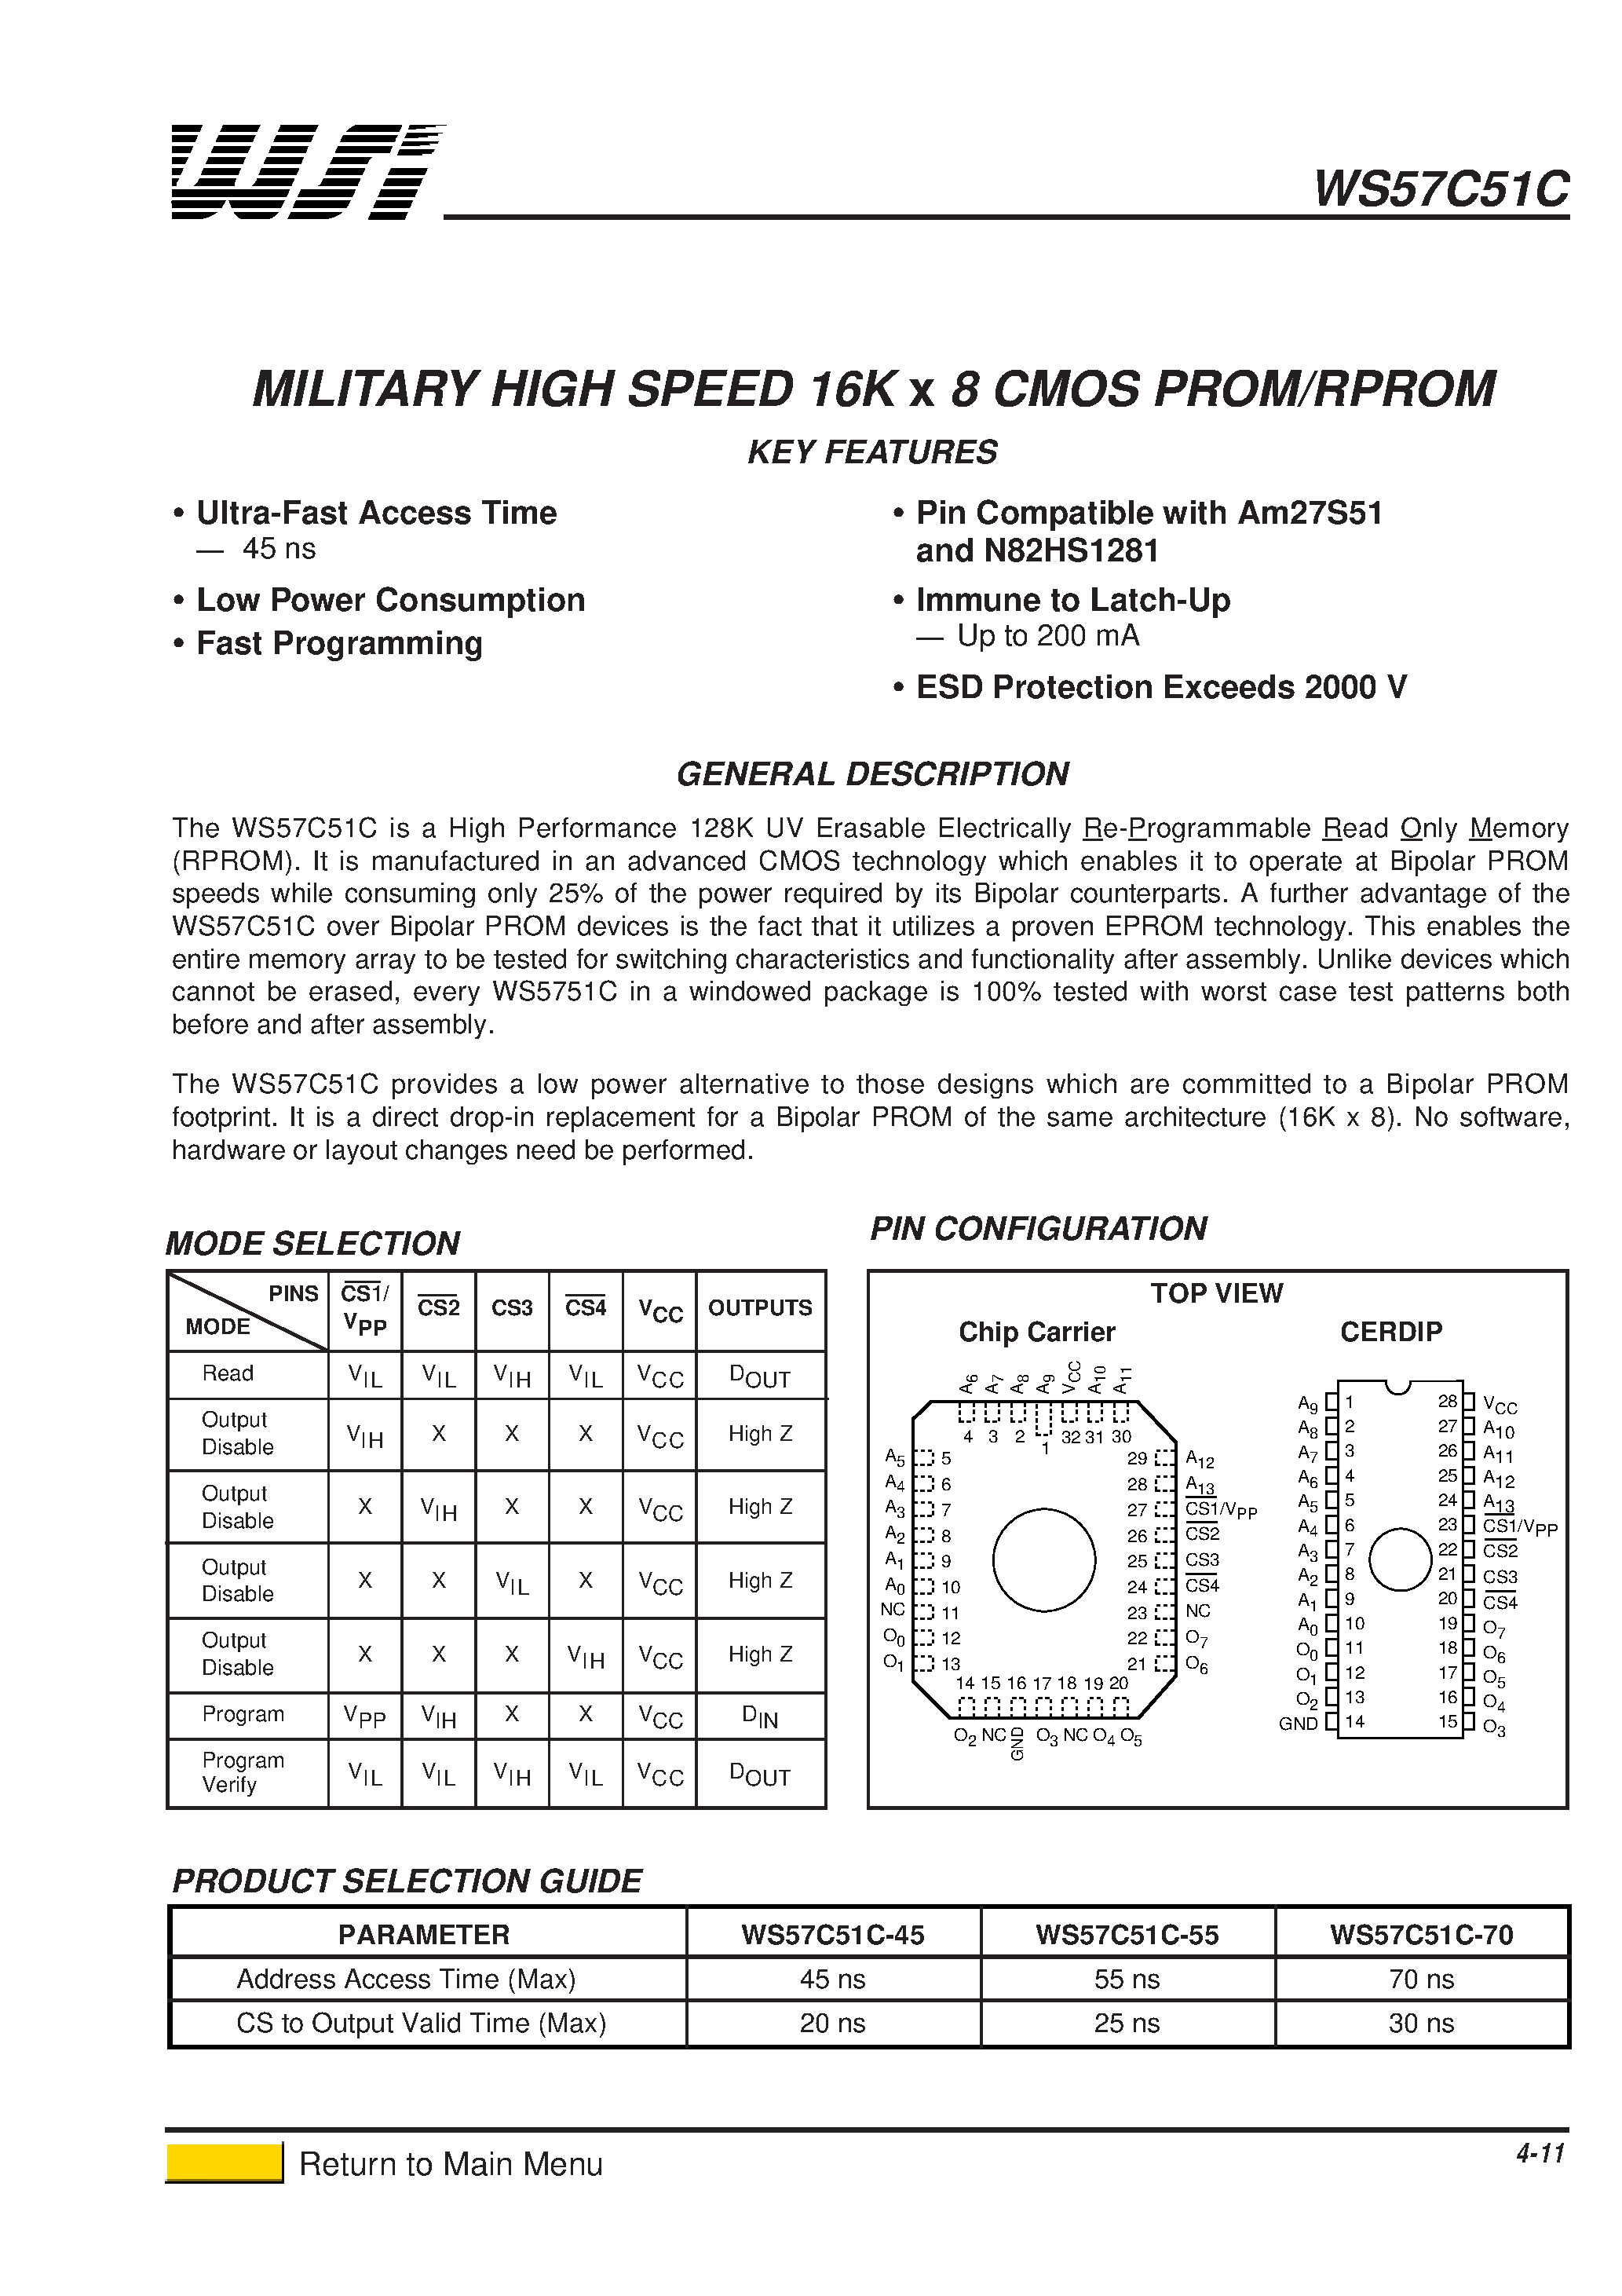 Даташит WS57C51C-55CMB - HIGH SPEED 16K x 8 CMOS PROM/RPROM страница 1